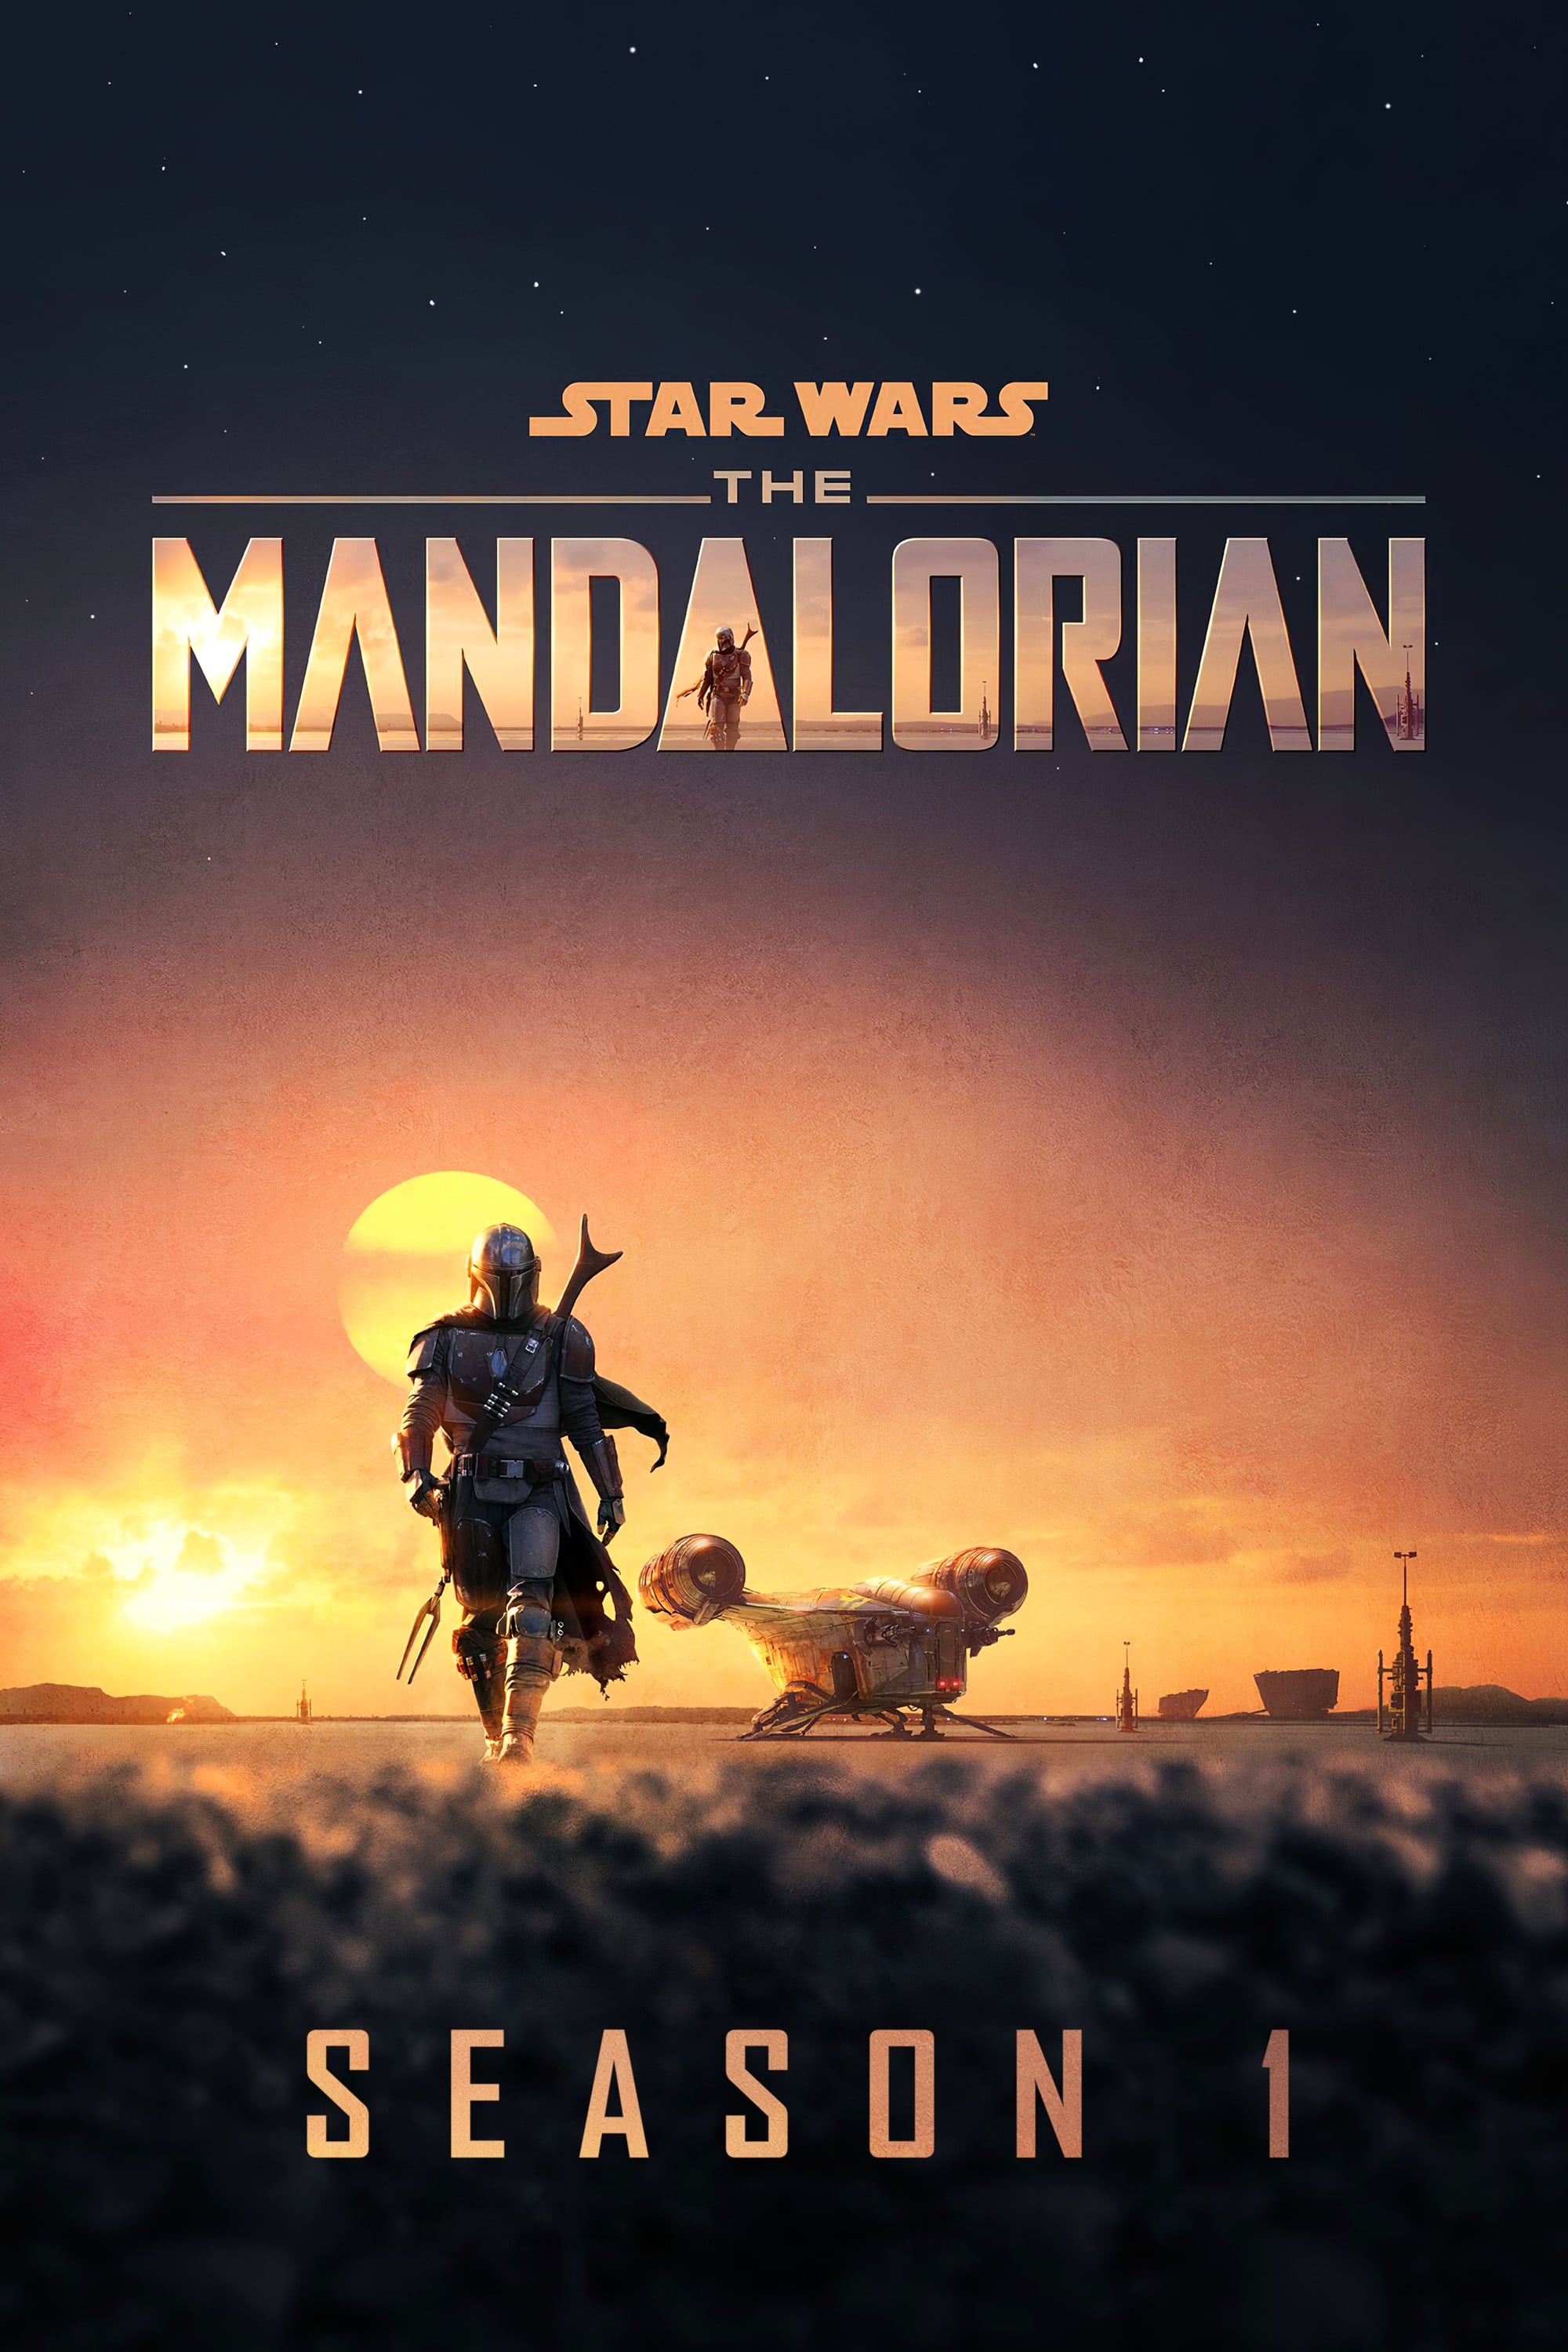 The Mandalorian (2019) 720p-480p HEVC HDRip S01 Complete [Dual Audio] [Hindi or English] x265 ESubs